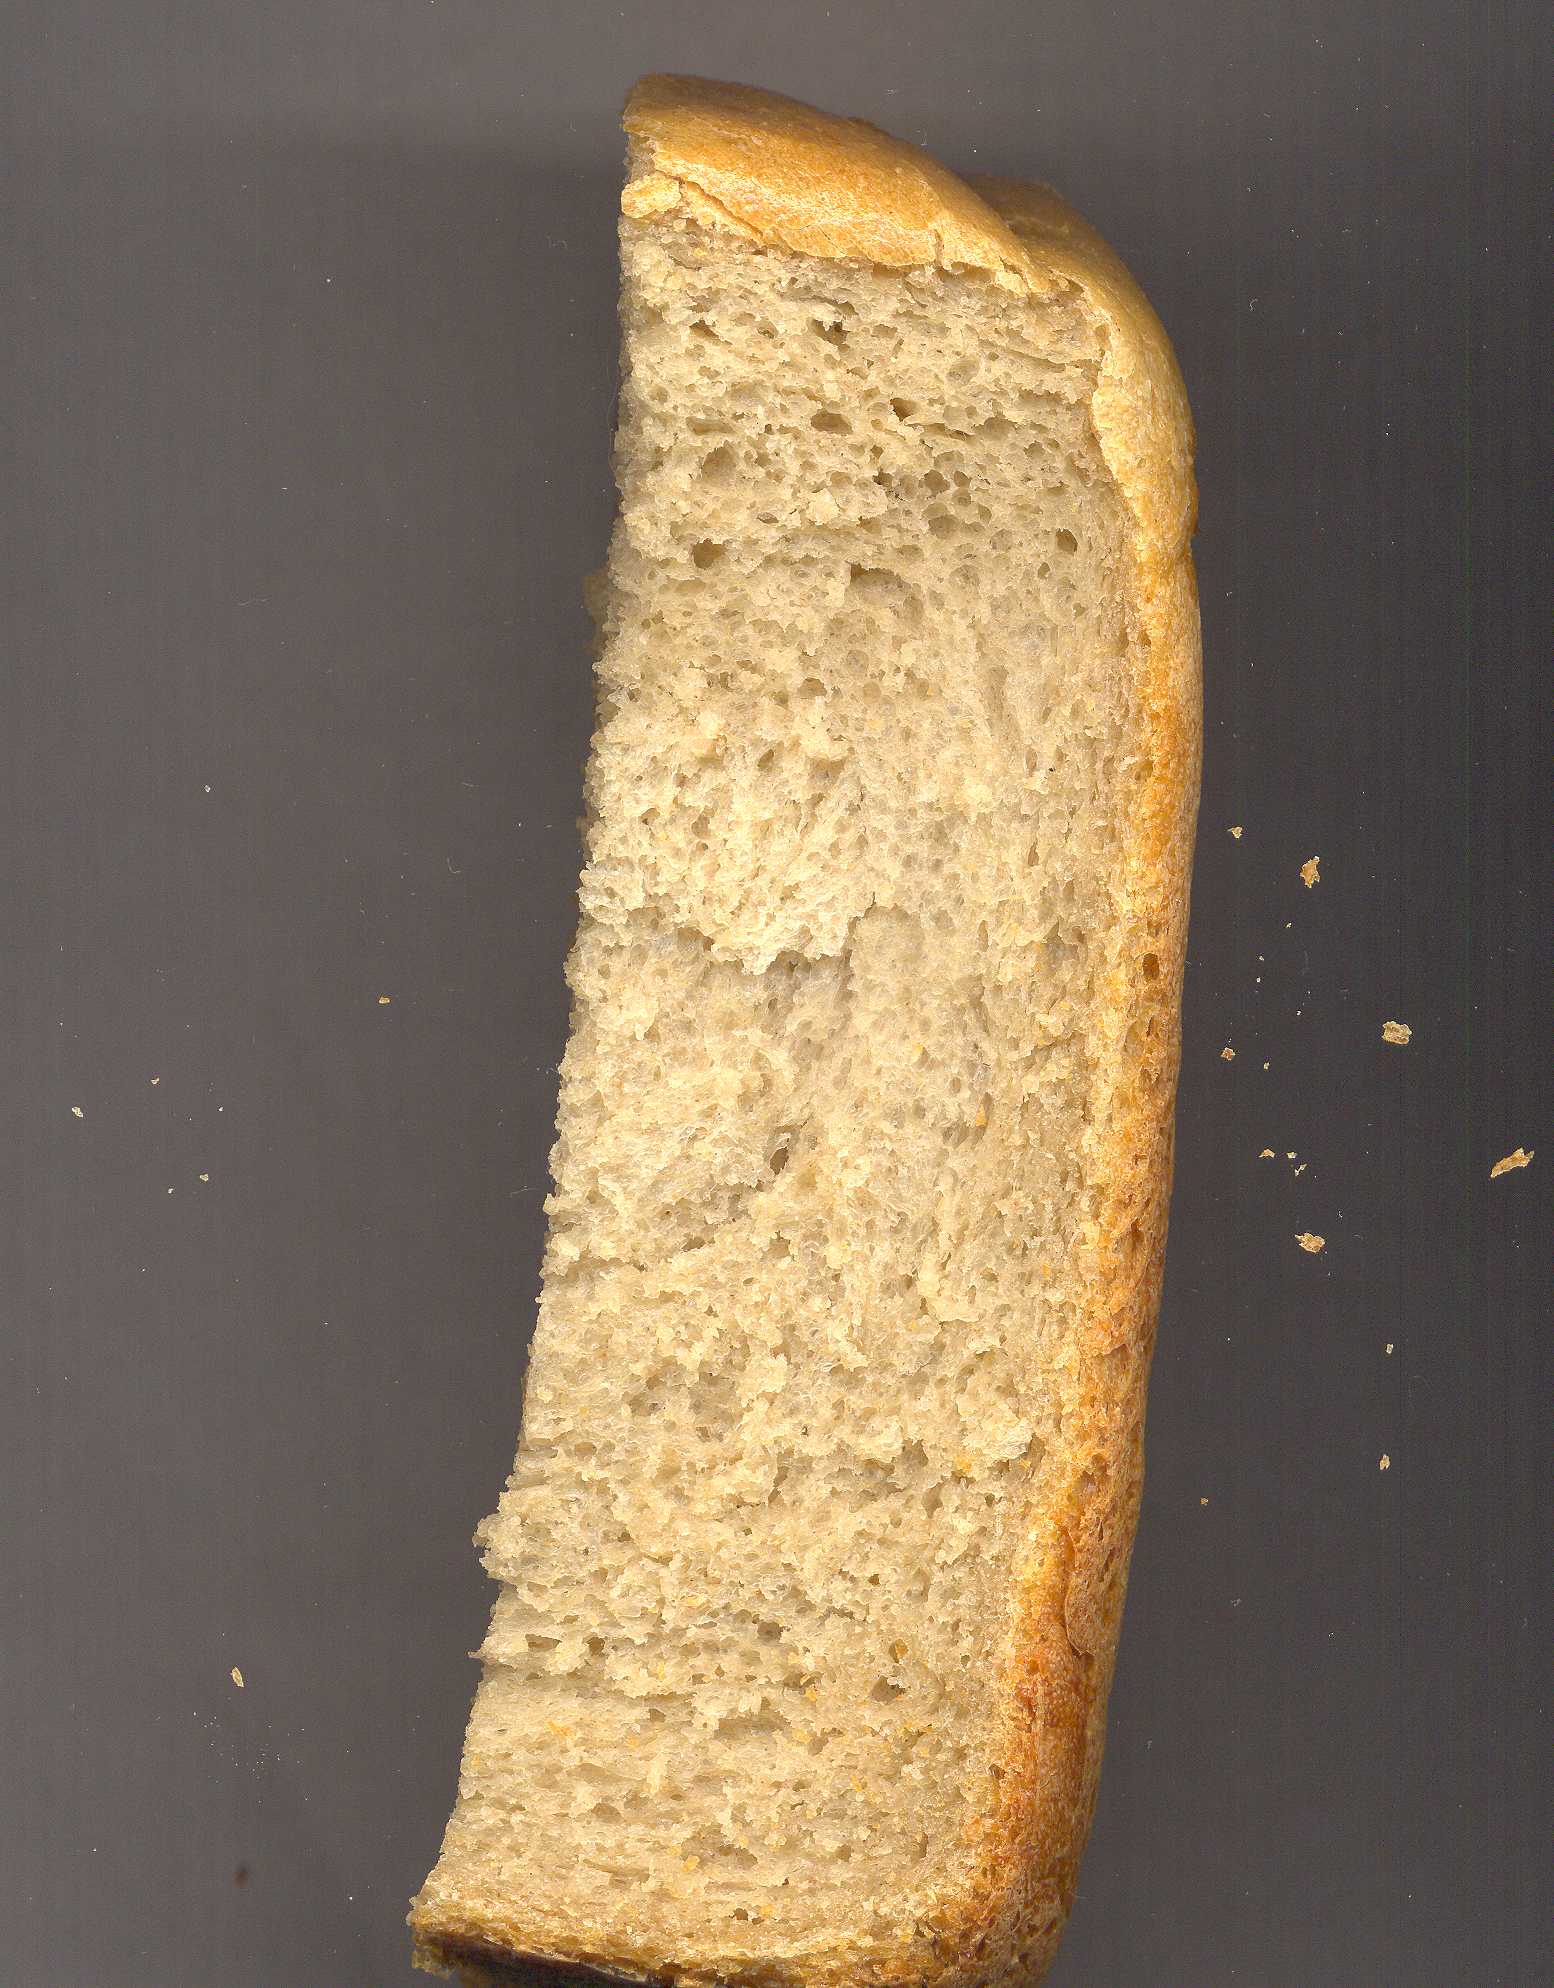 LG HB-1051. Pan de trigo, avena y trigo sarraceno